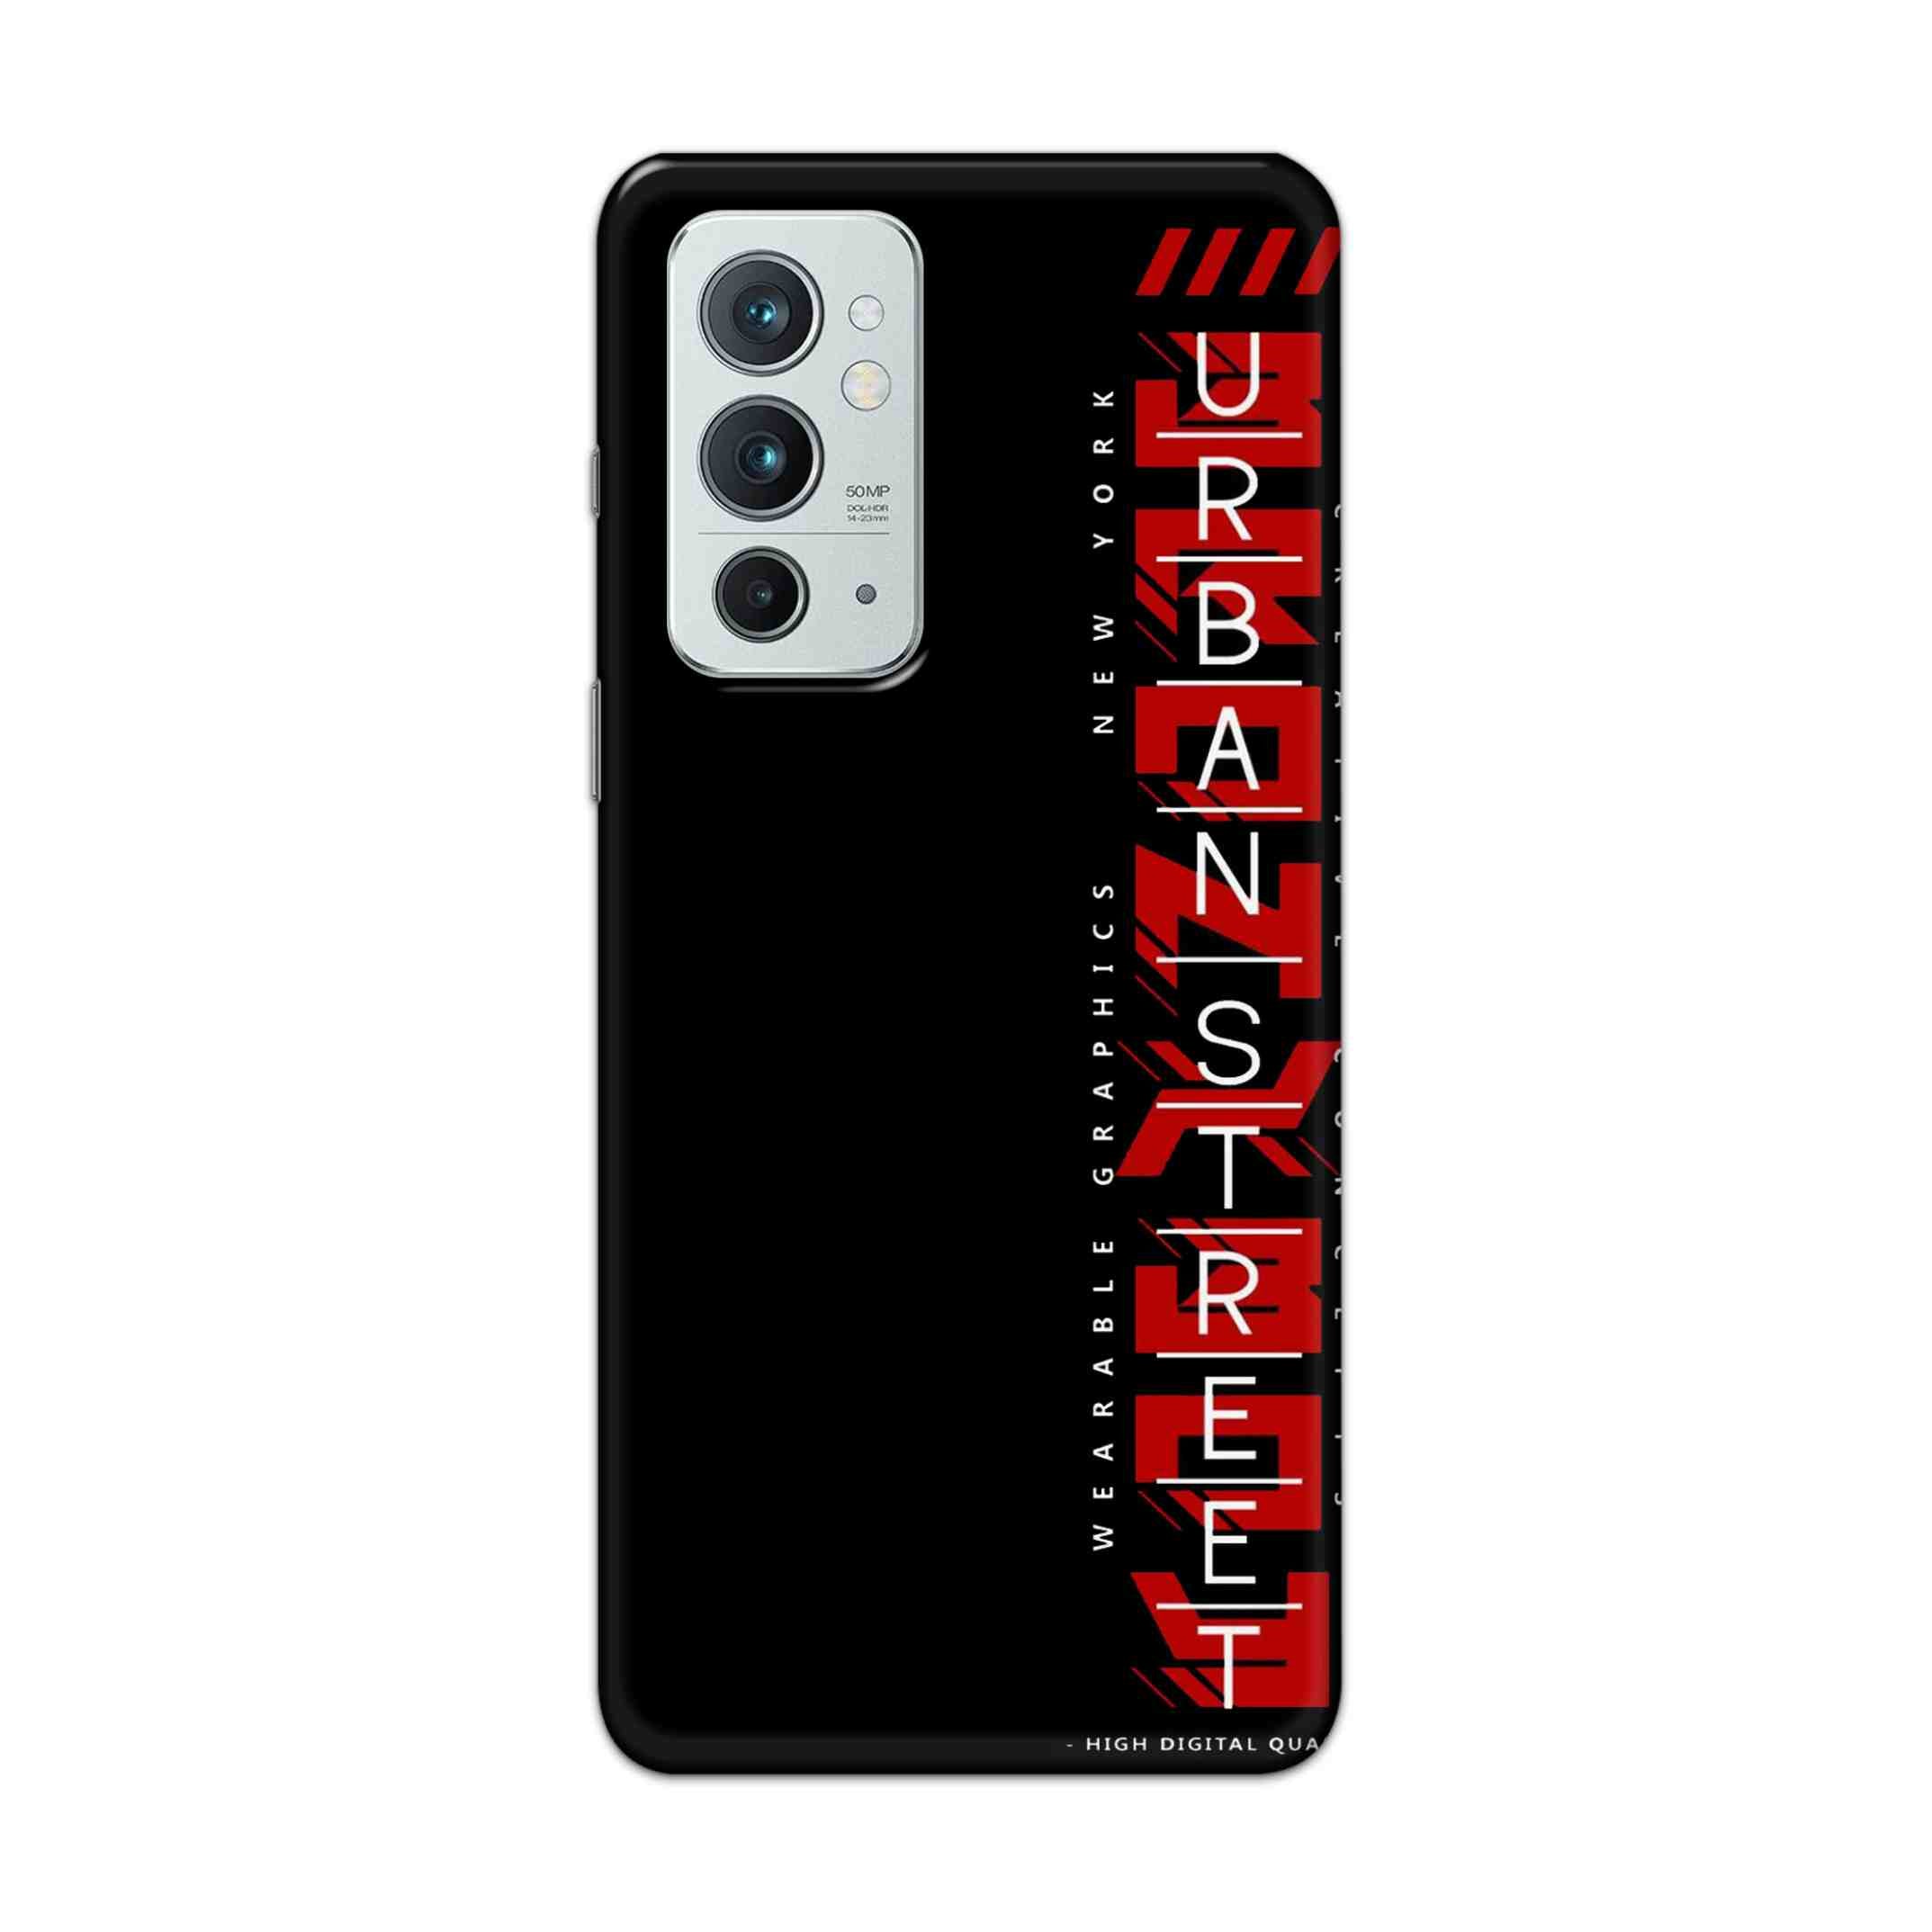 Buy Urban Street Hard Back Mobile Phone Case Cover For OnePlus 9RT 5G Online